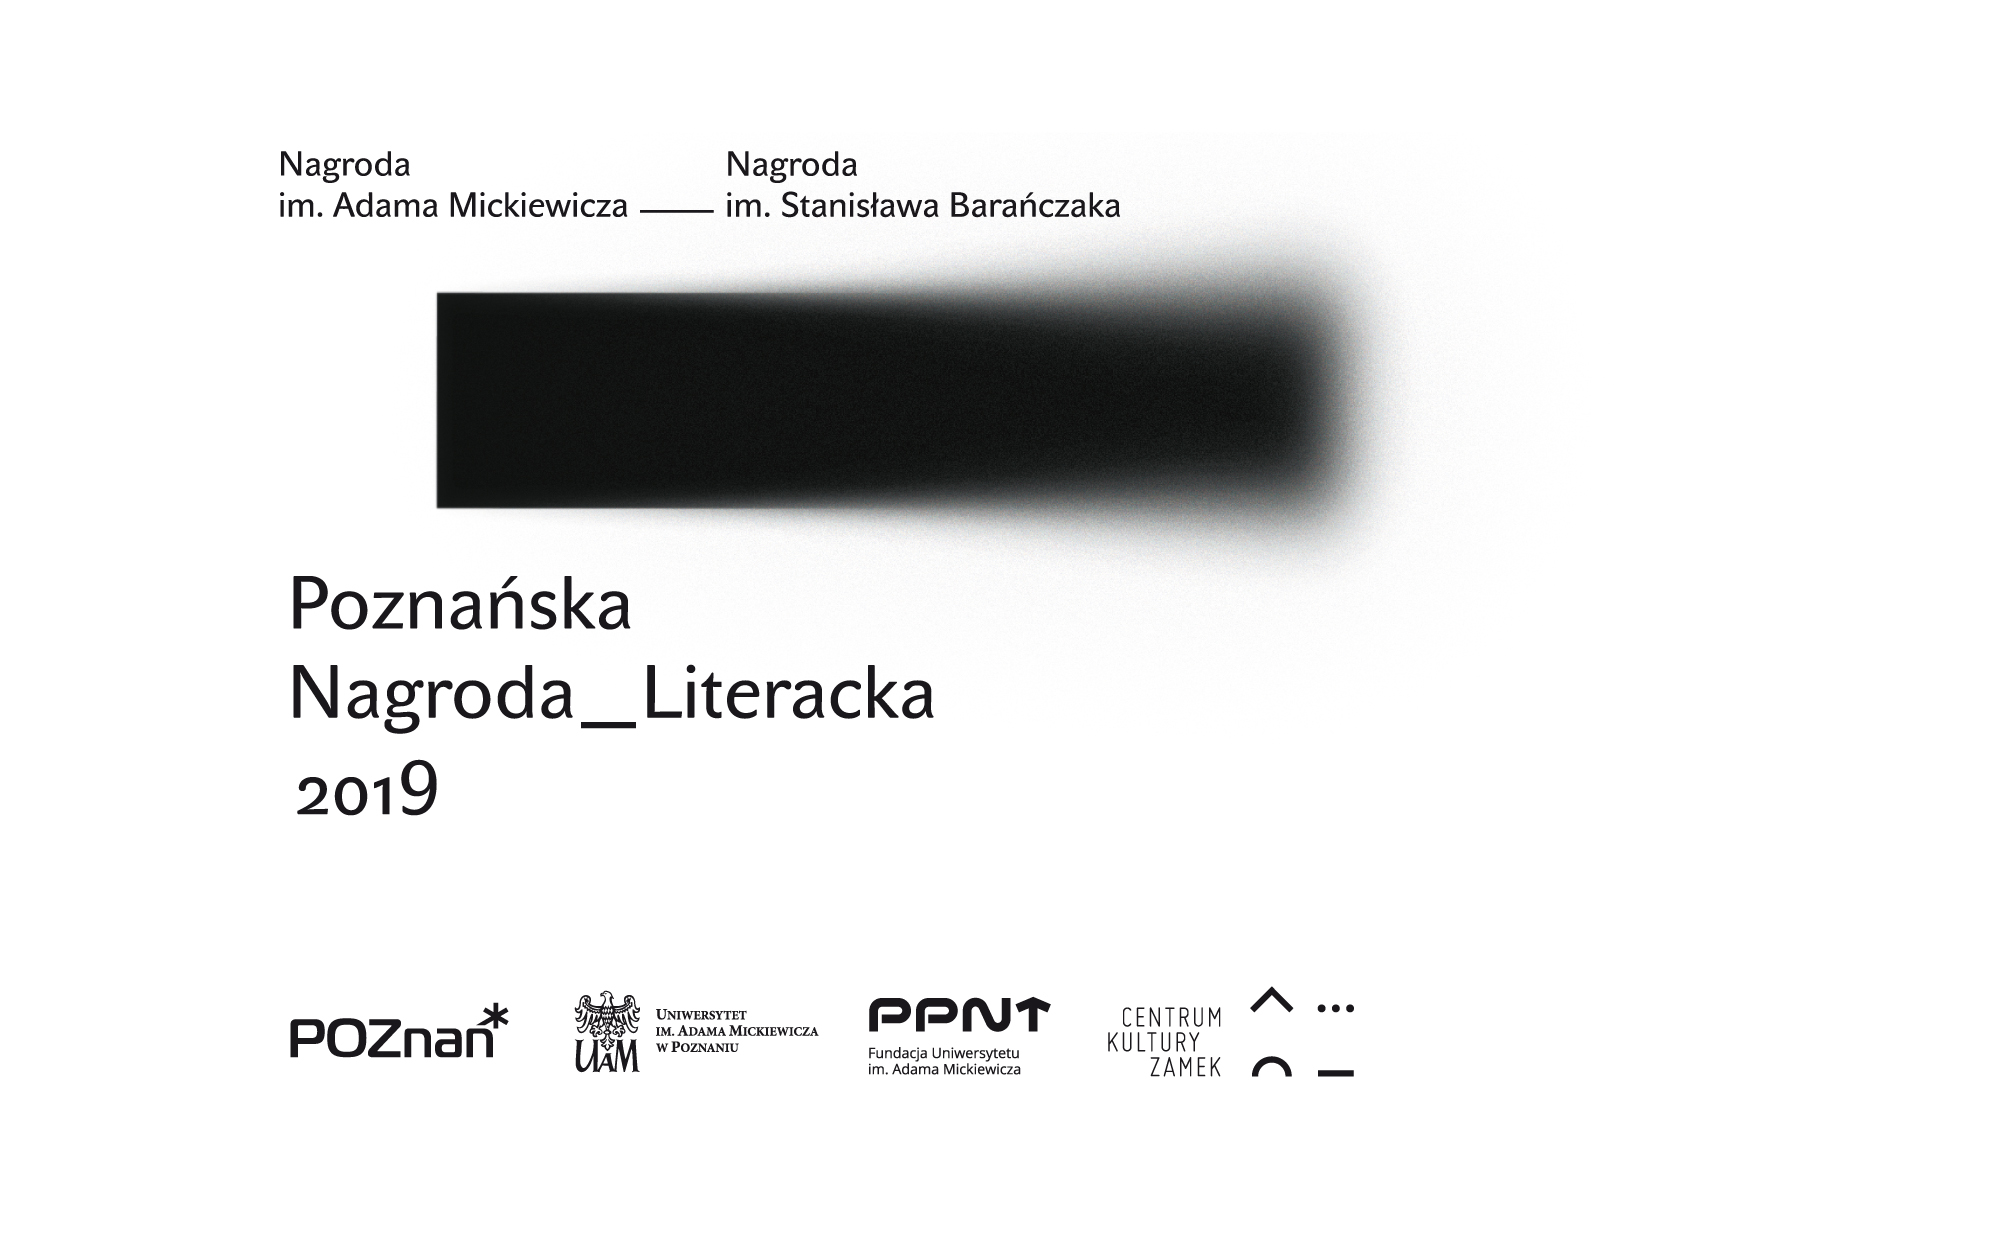 Poznańska Nagroda Literacka 2019 (źródło: materiały prasowe)